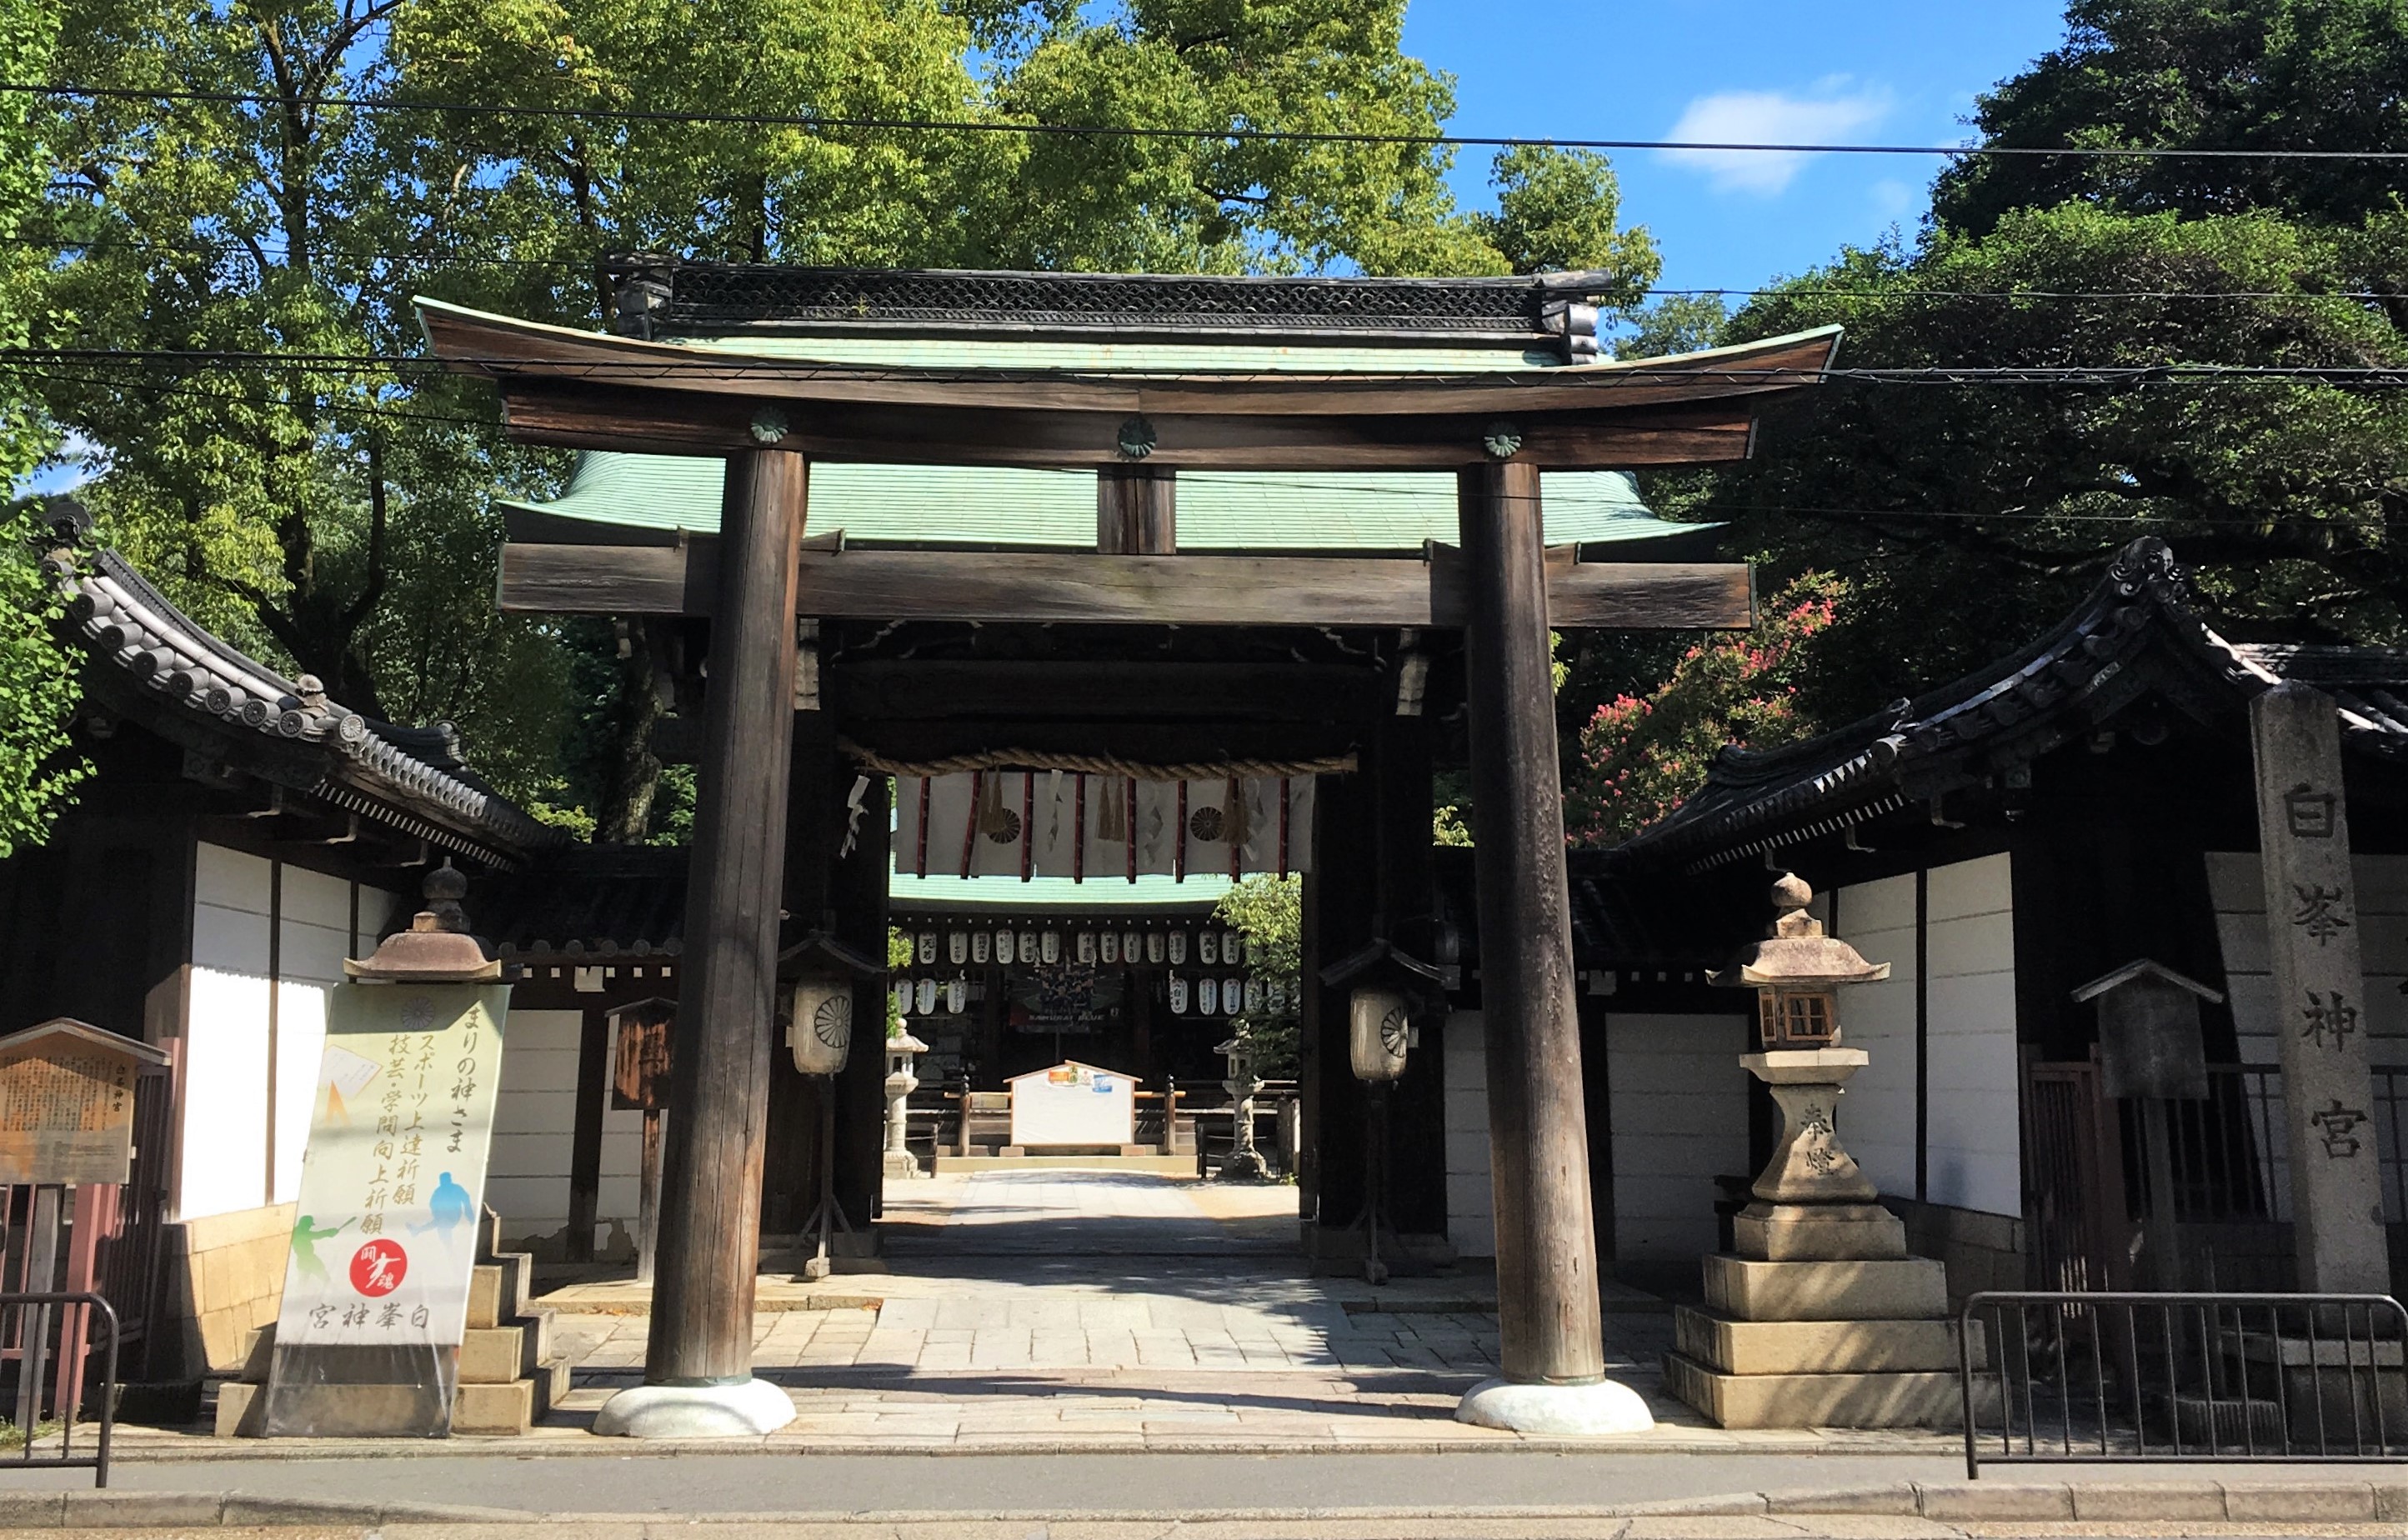 Entrance of Shiramine Jingu